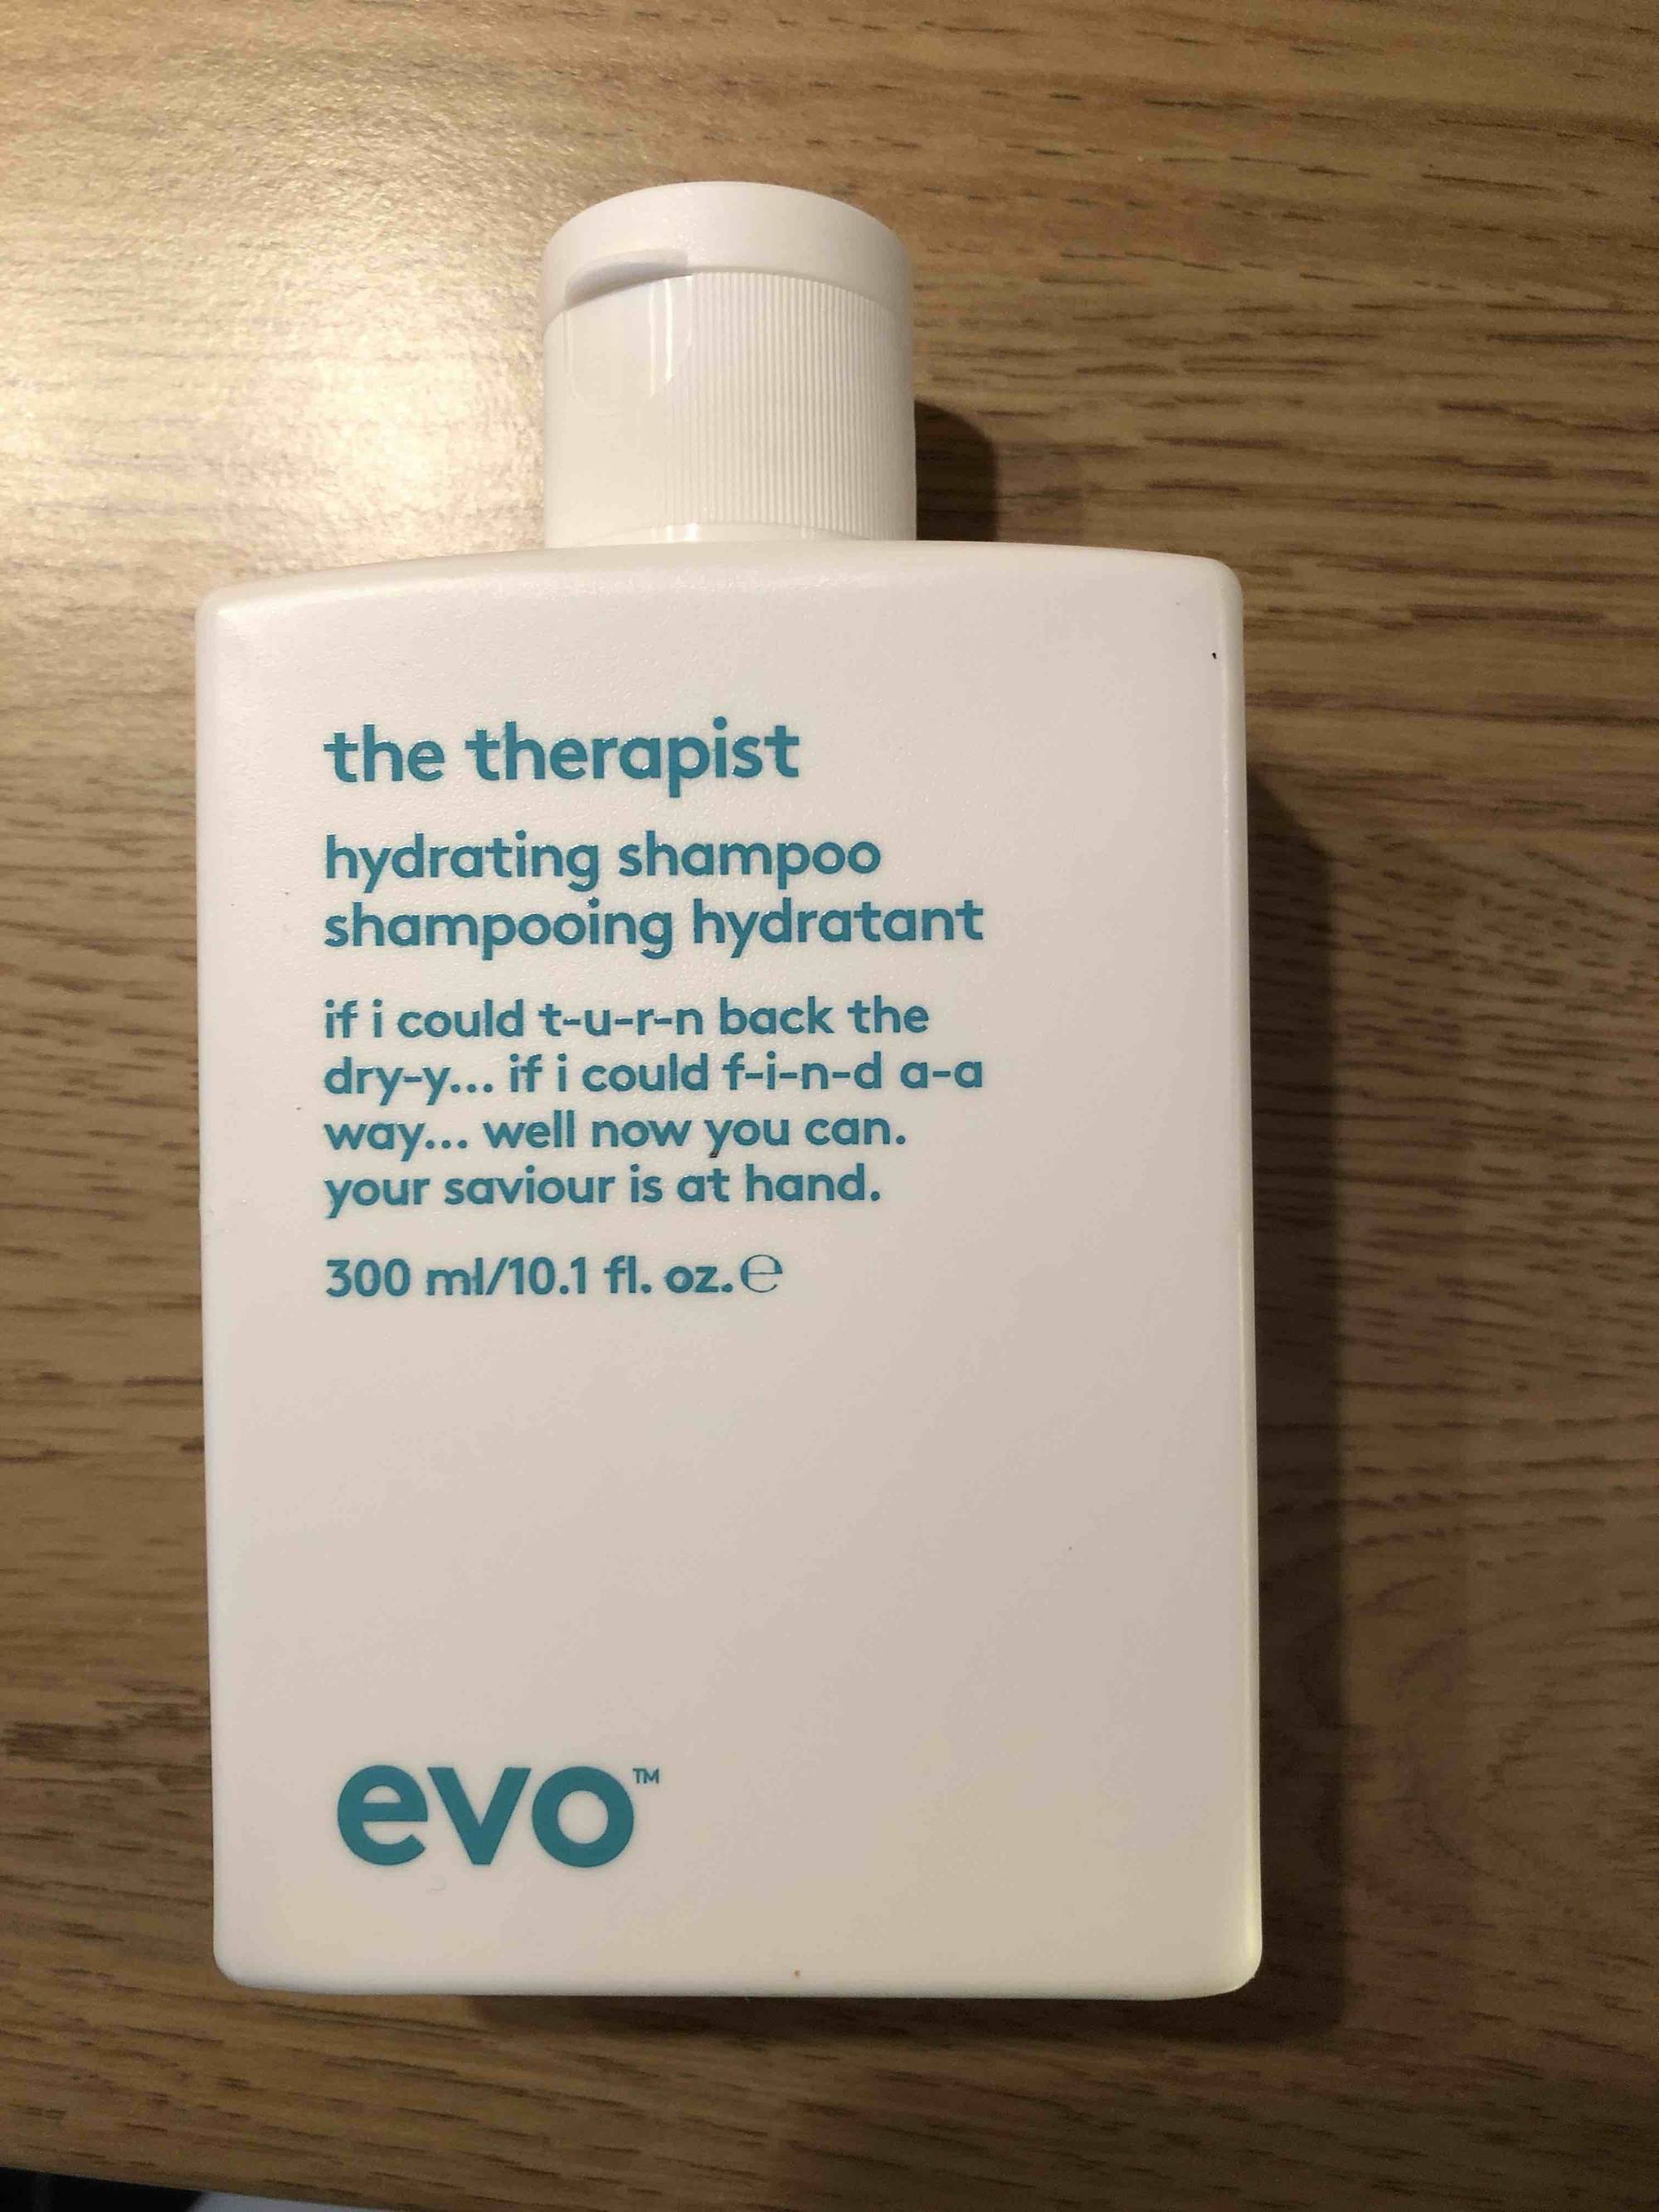 EVO - The therapist - Shampooing hydratant